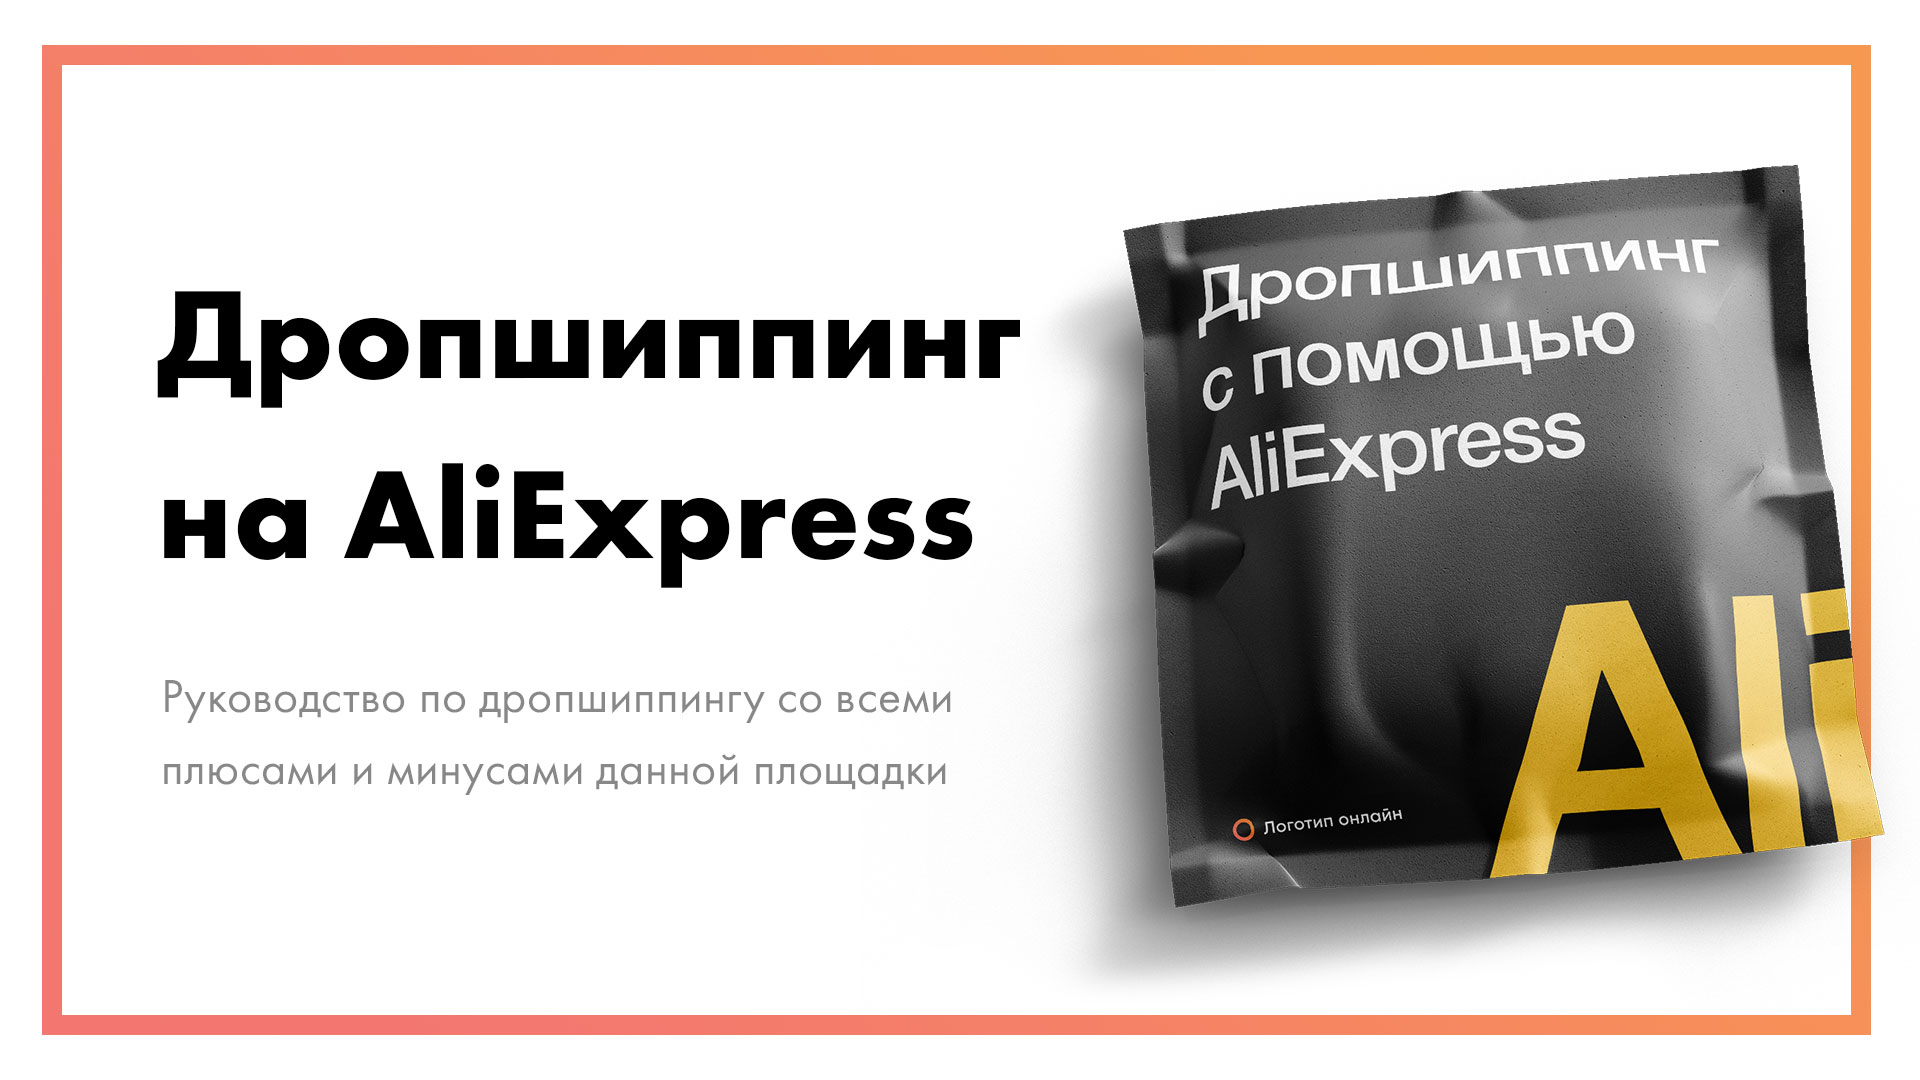 Дропшиппинг-на-AliExpress--руководство,-плюсы-и-минусы-в-2021-году.jpg